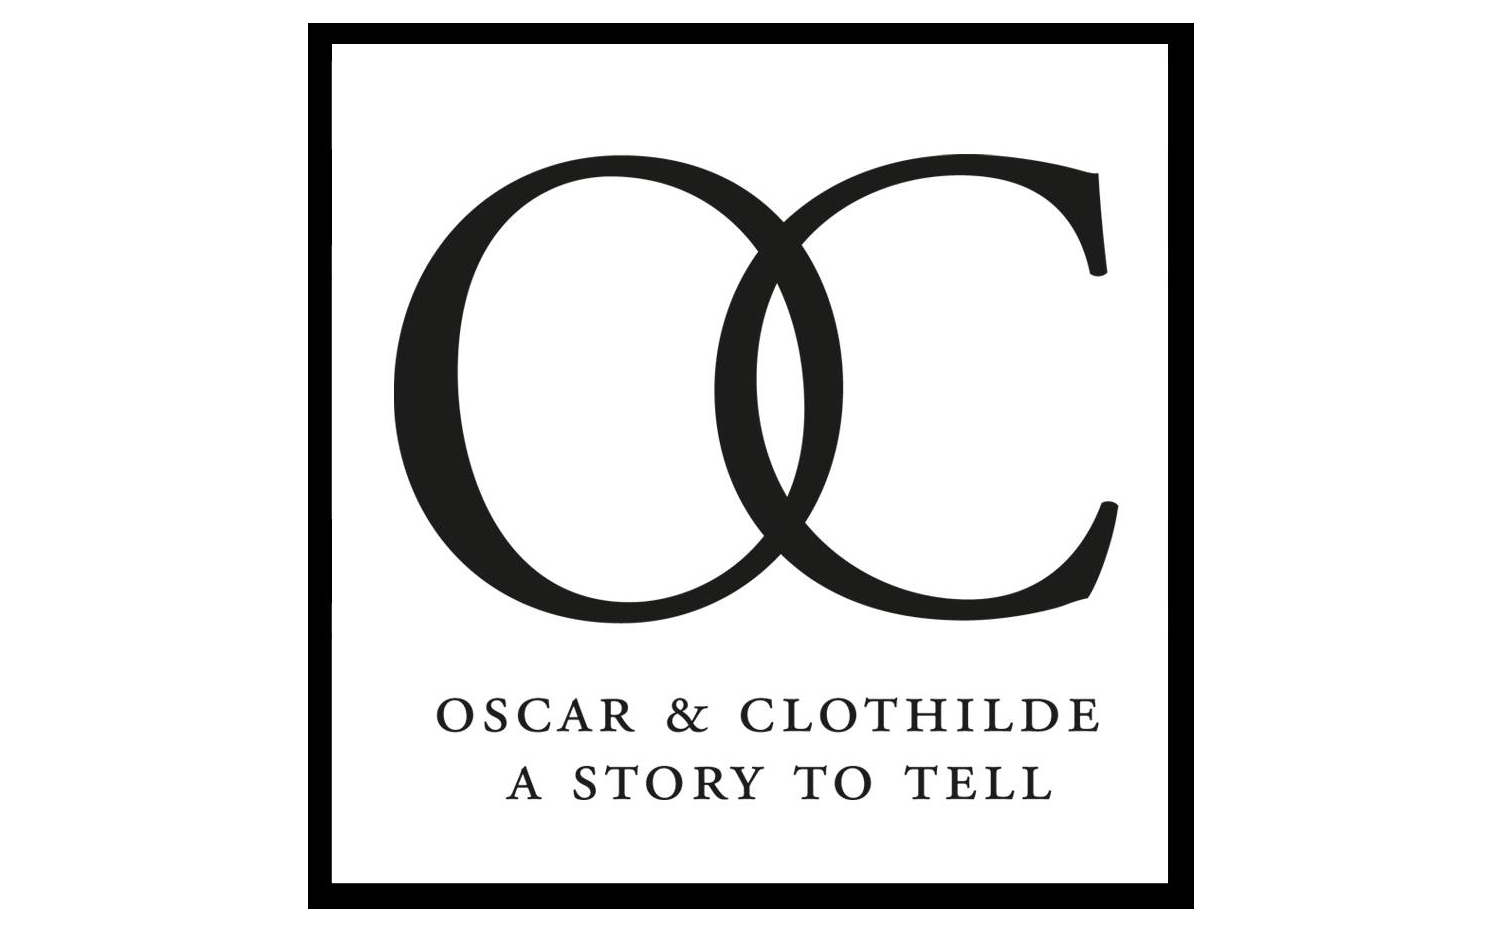 Oscar & Clothilde logo